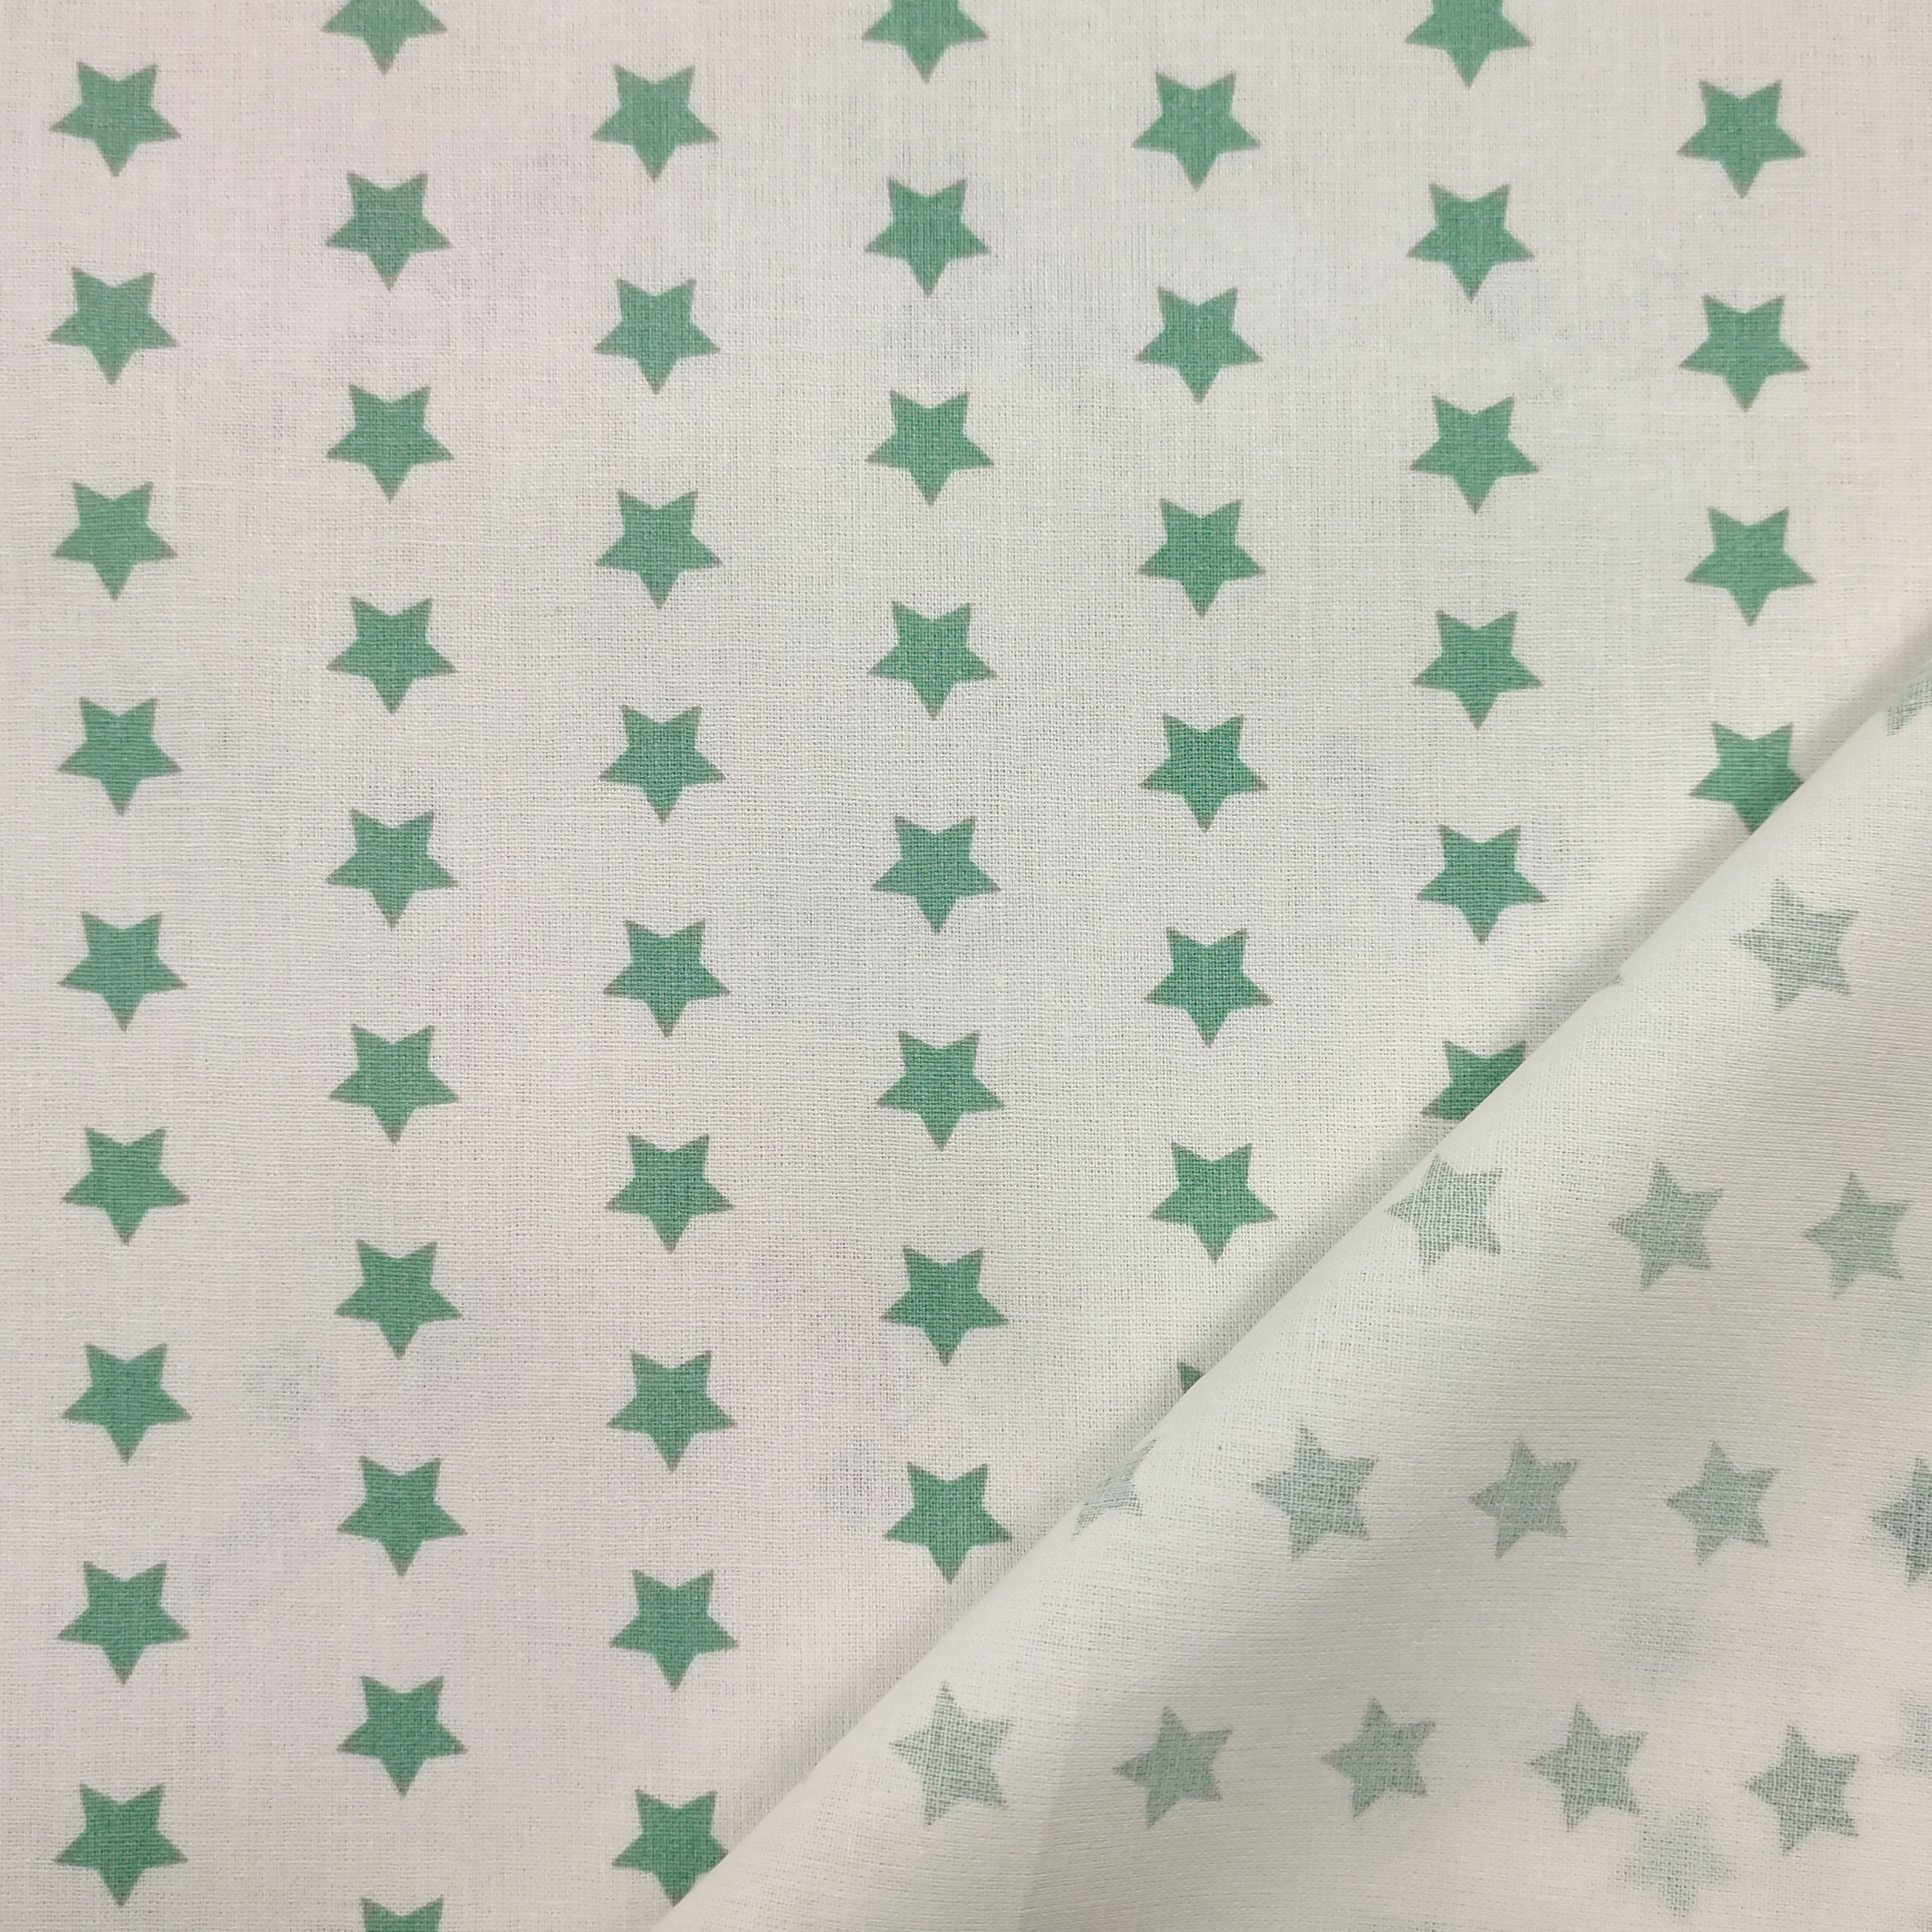 tessuto per bambini stelle verde marino sfondo bianco